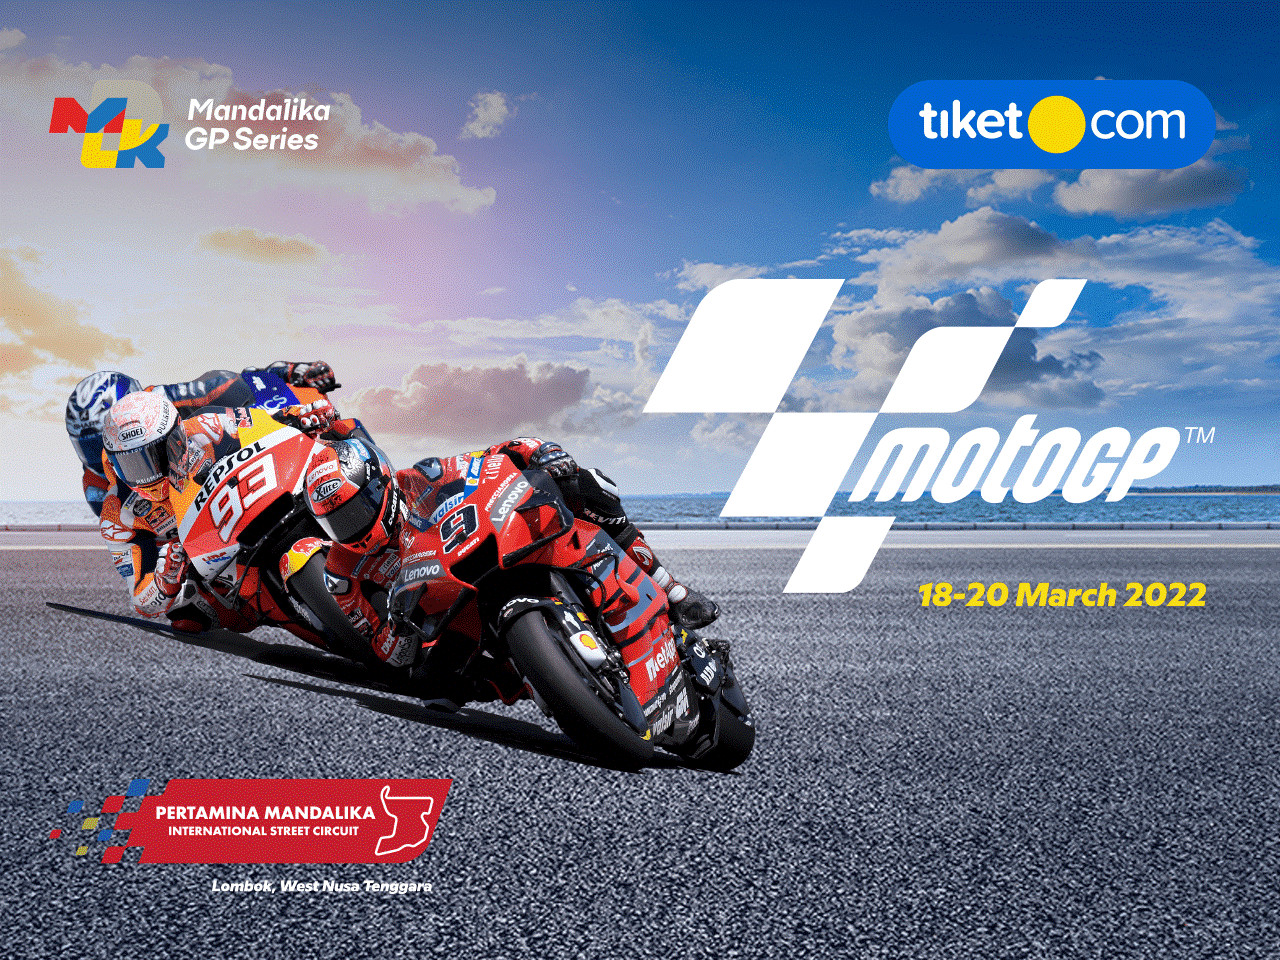 MotoGP Mandalika tickets now available at tiket - Inforial